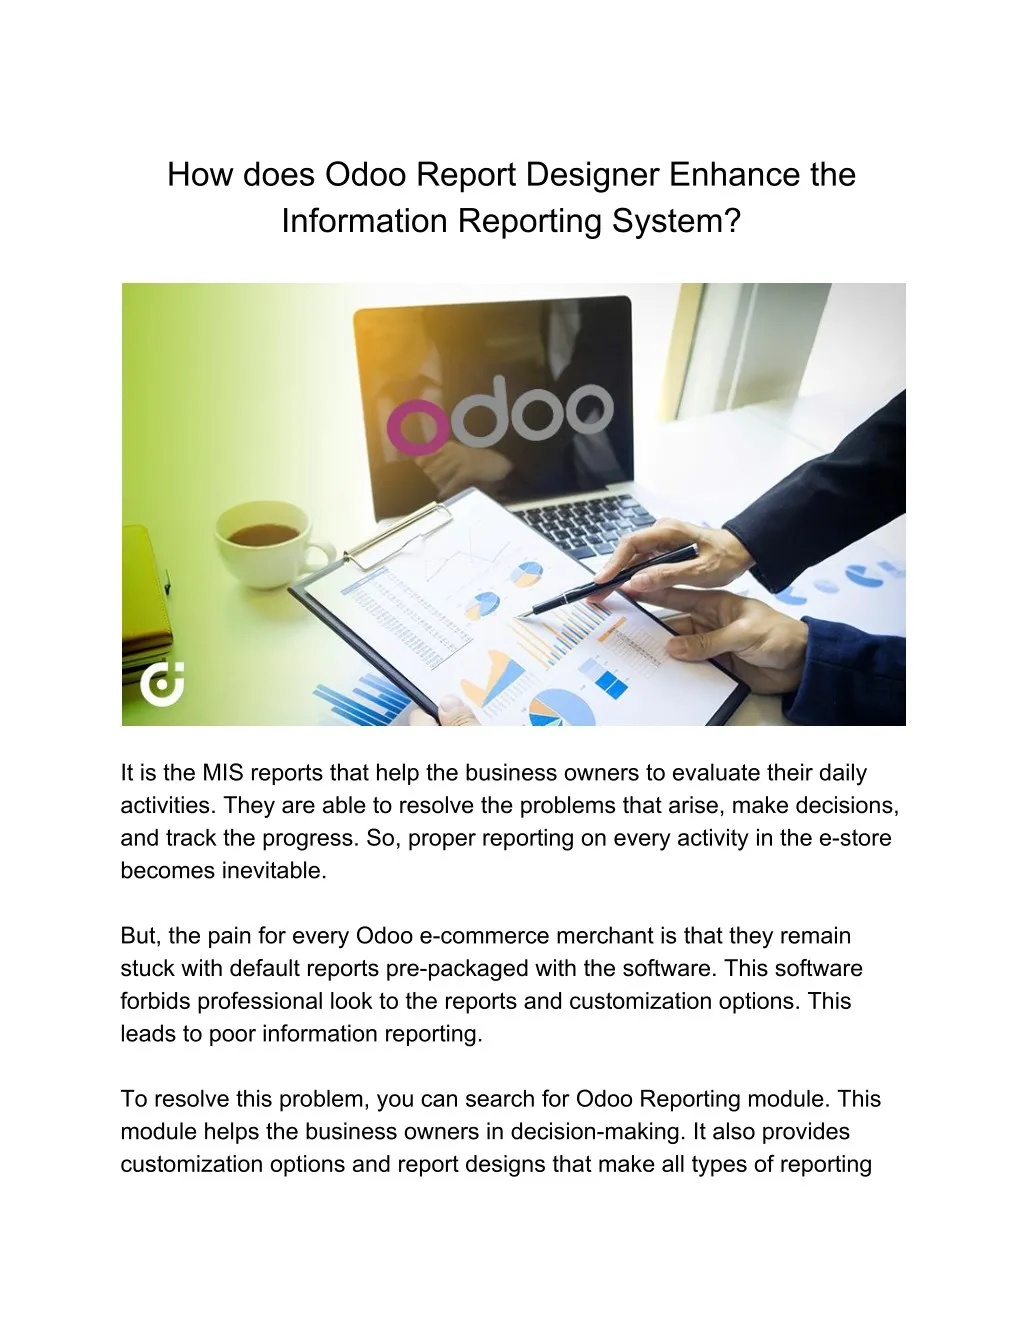 how does odoo report designer enhance